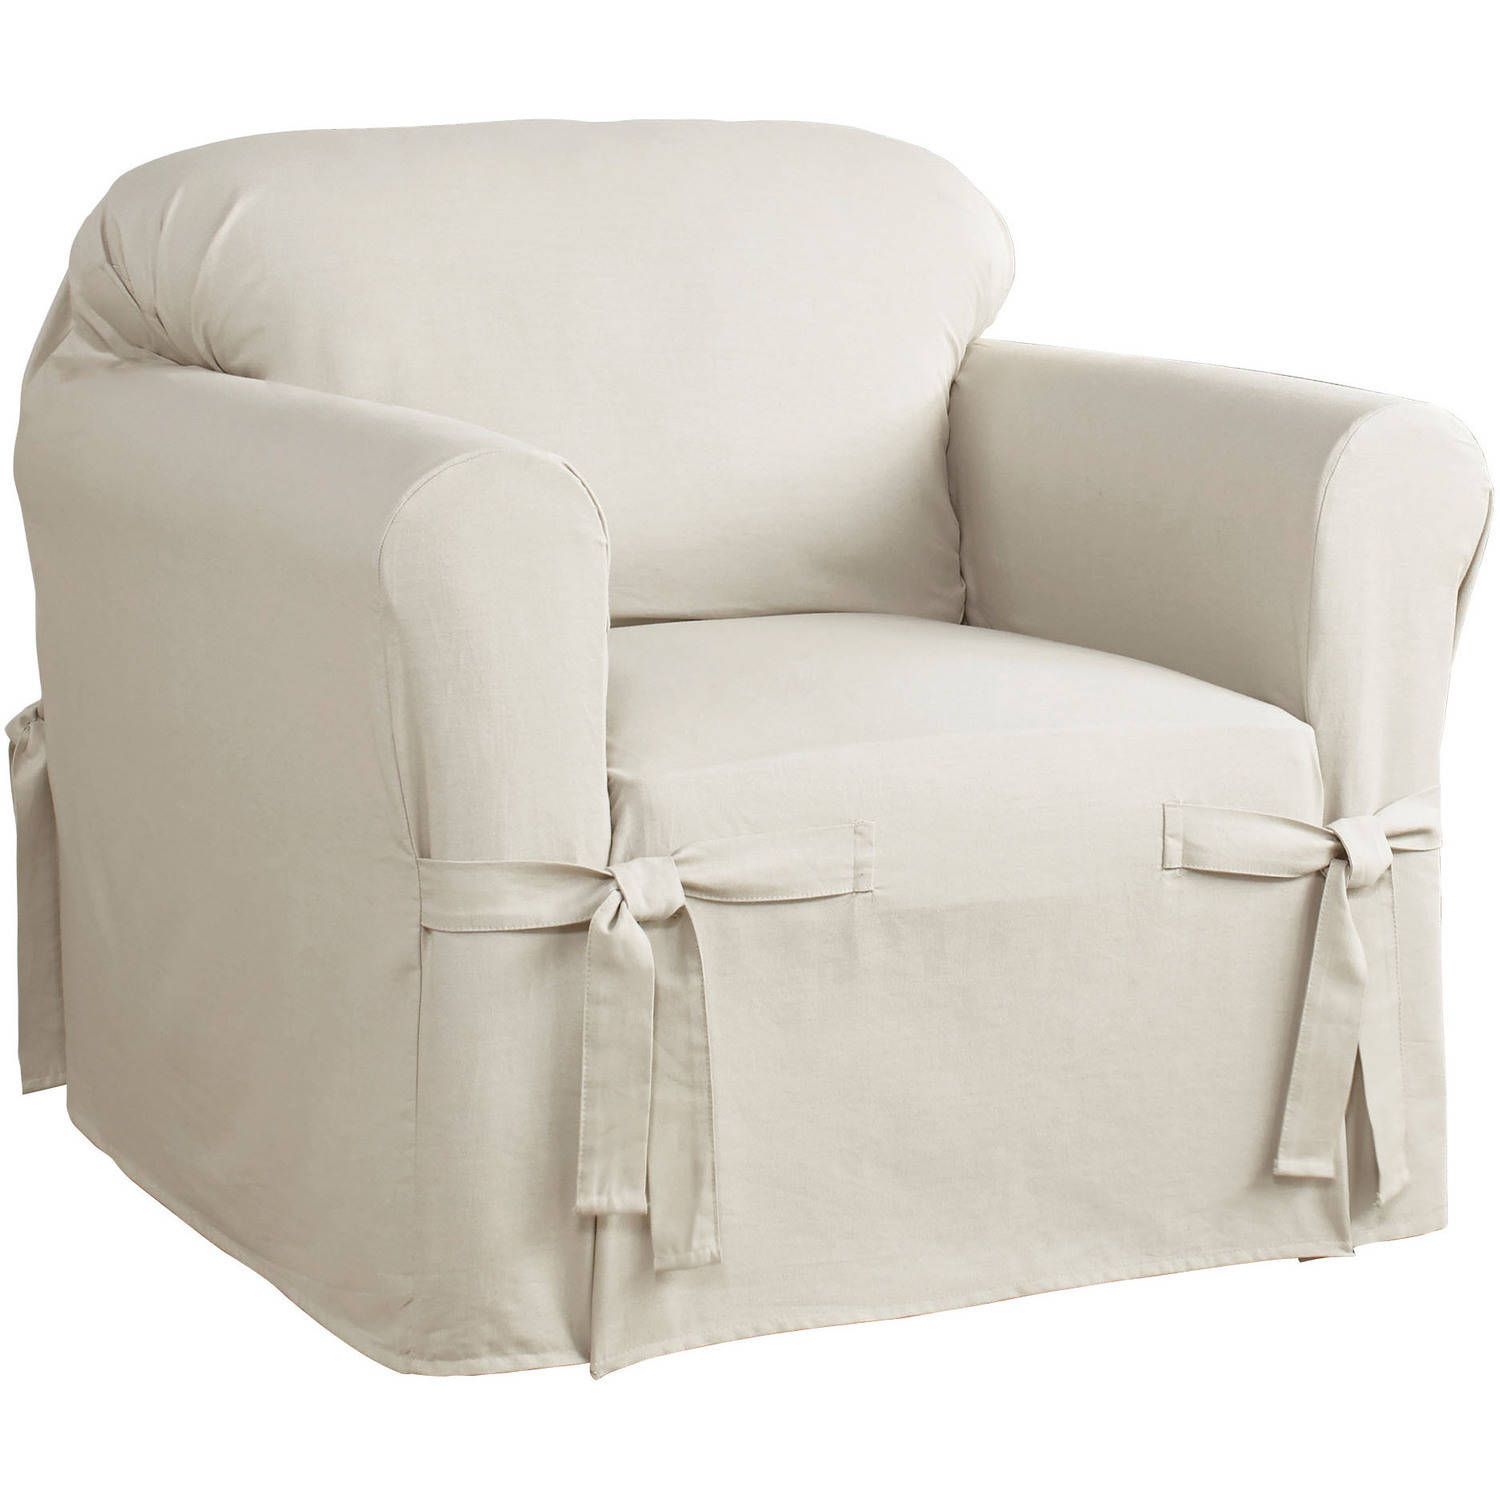 Chair Slip Covers – decordip.com